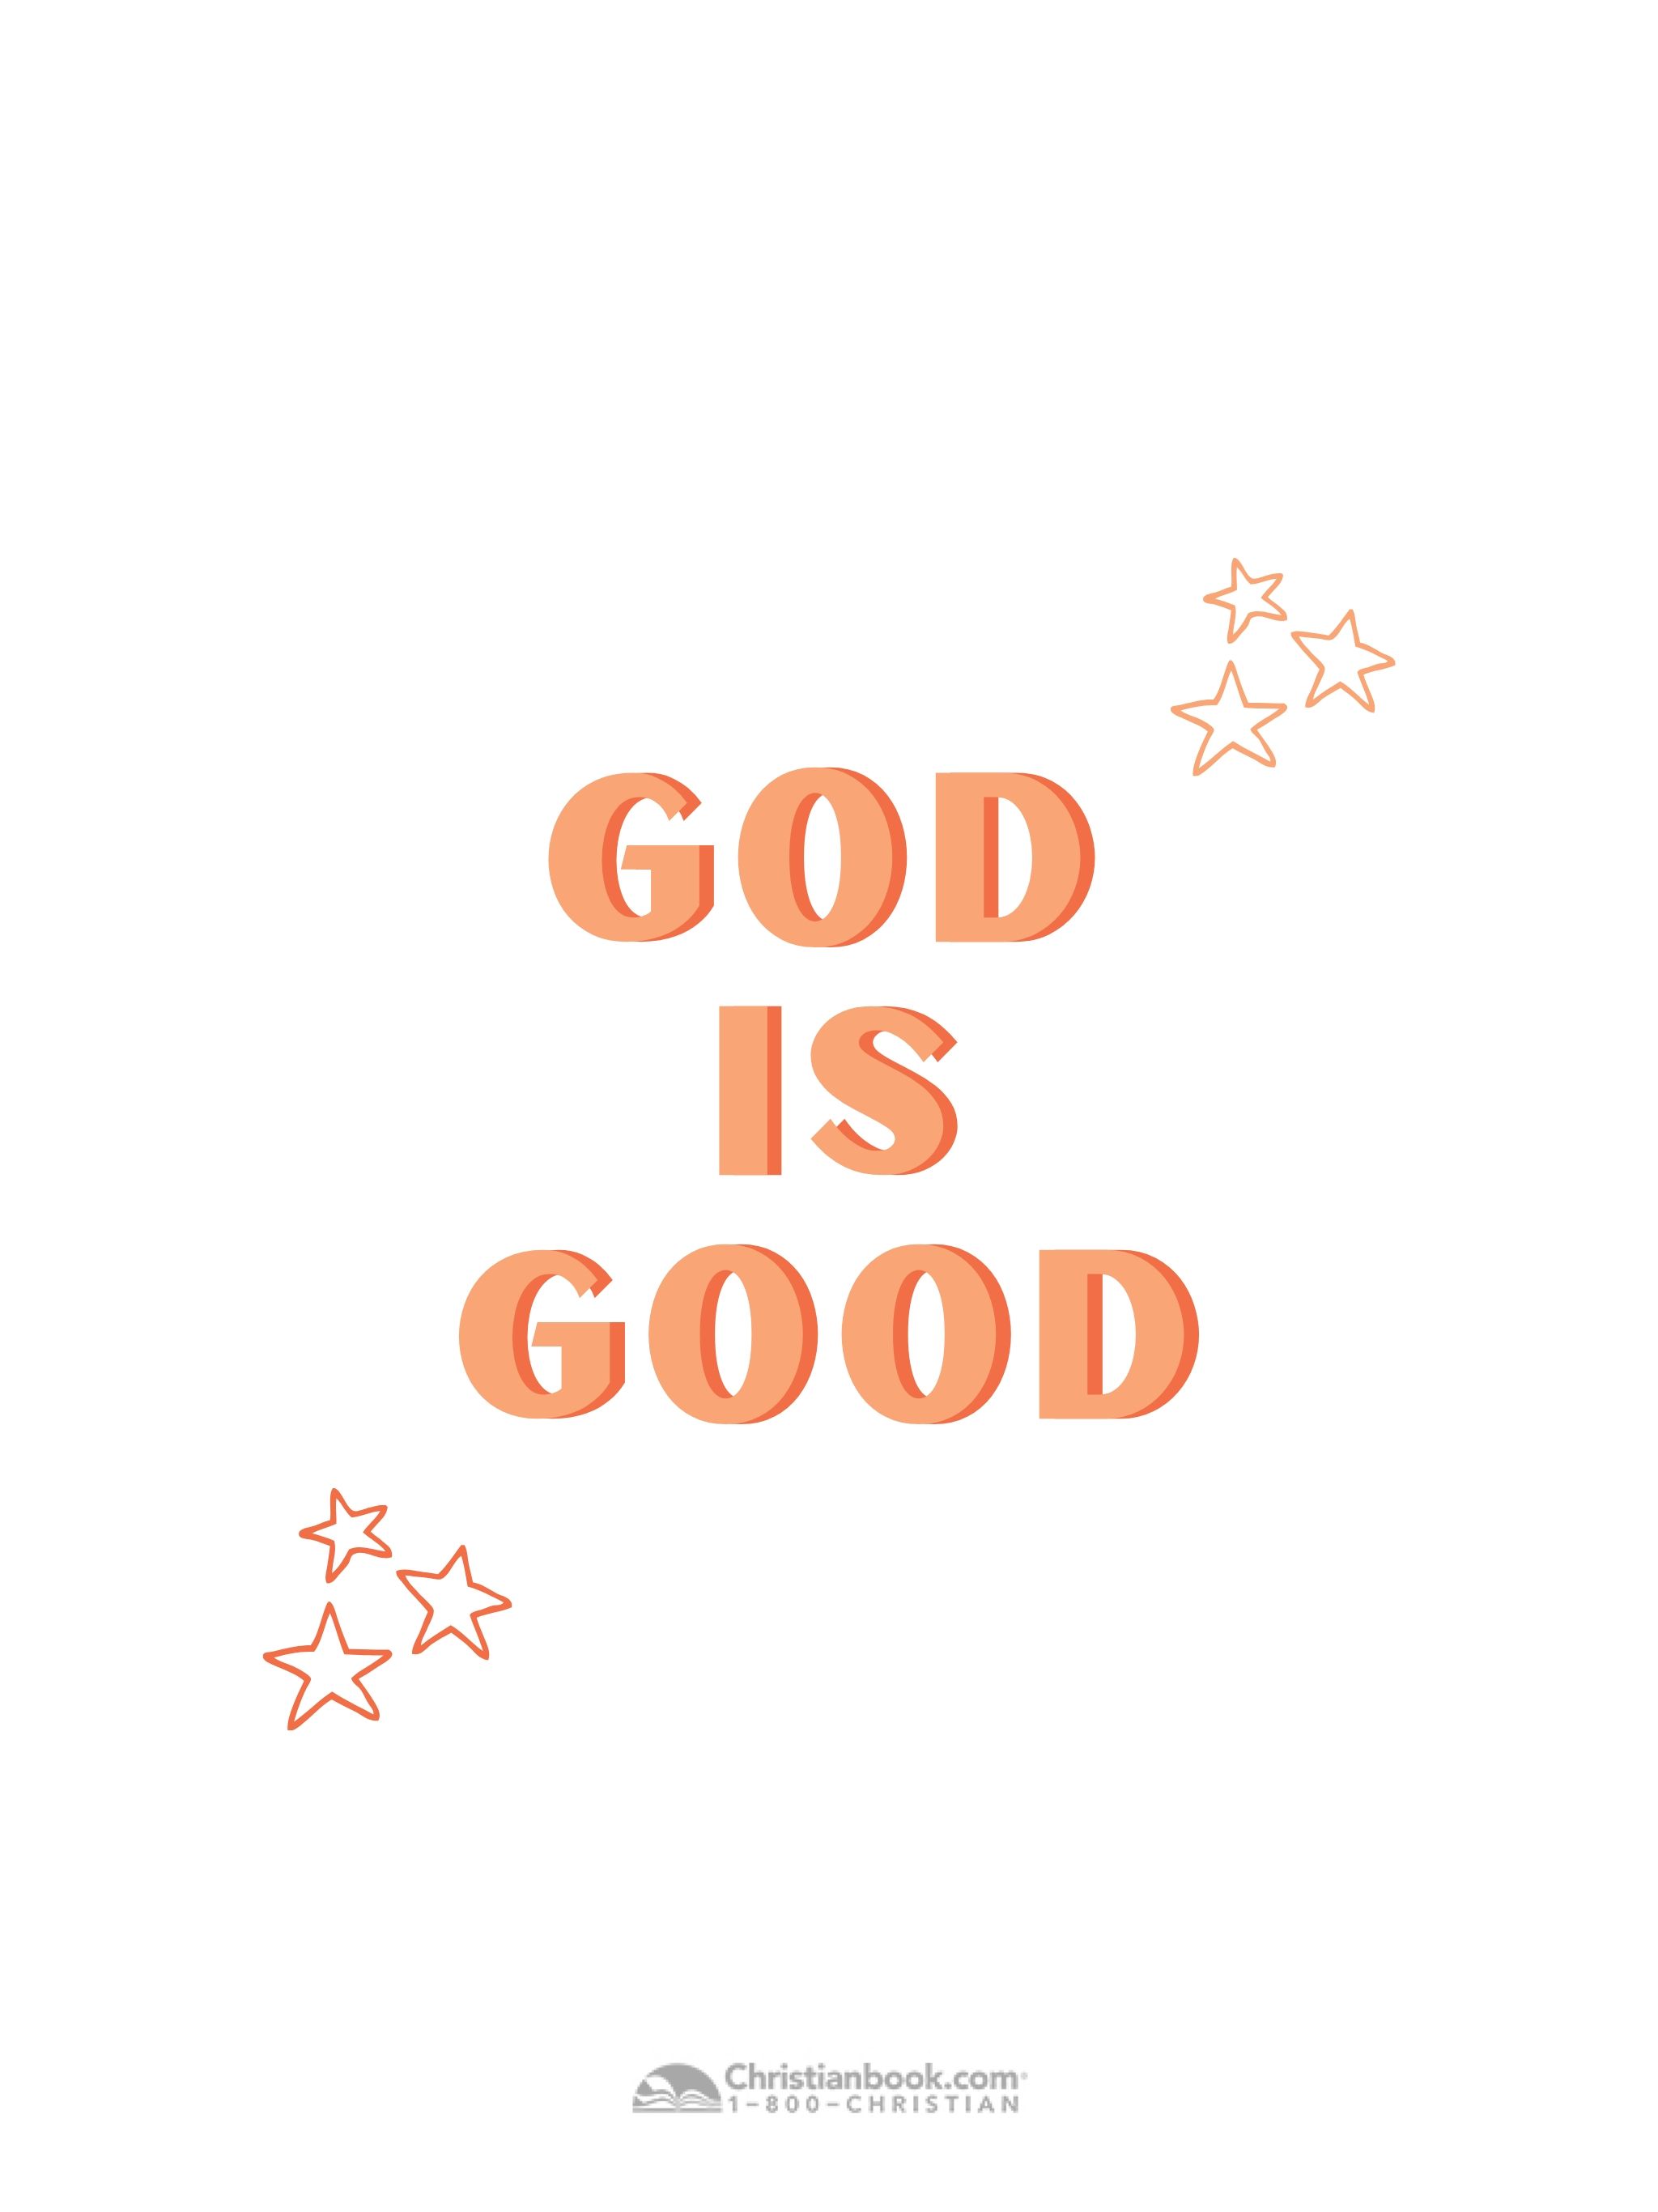 God is good wallpaper by Pixallan  Download on ZEDGE  7684